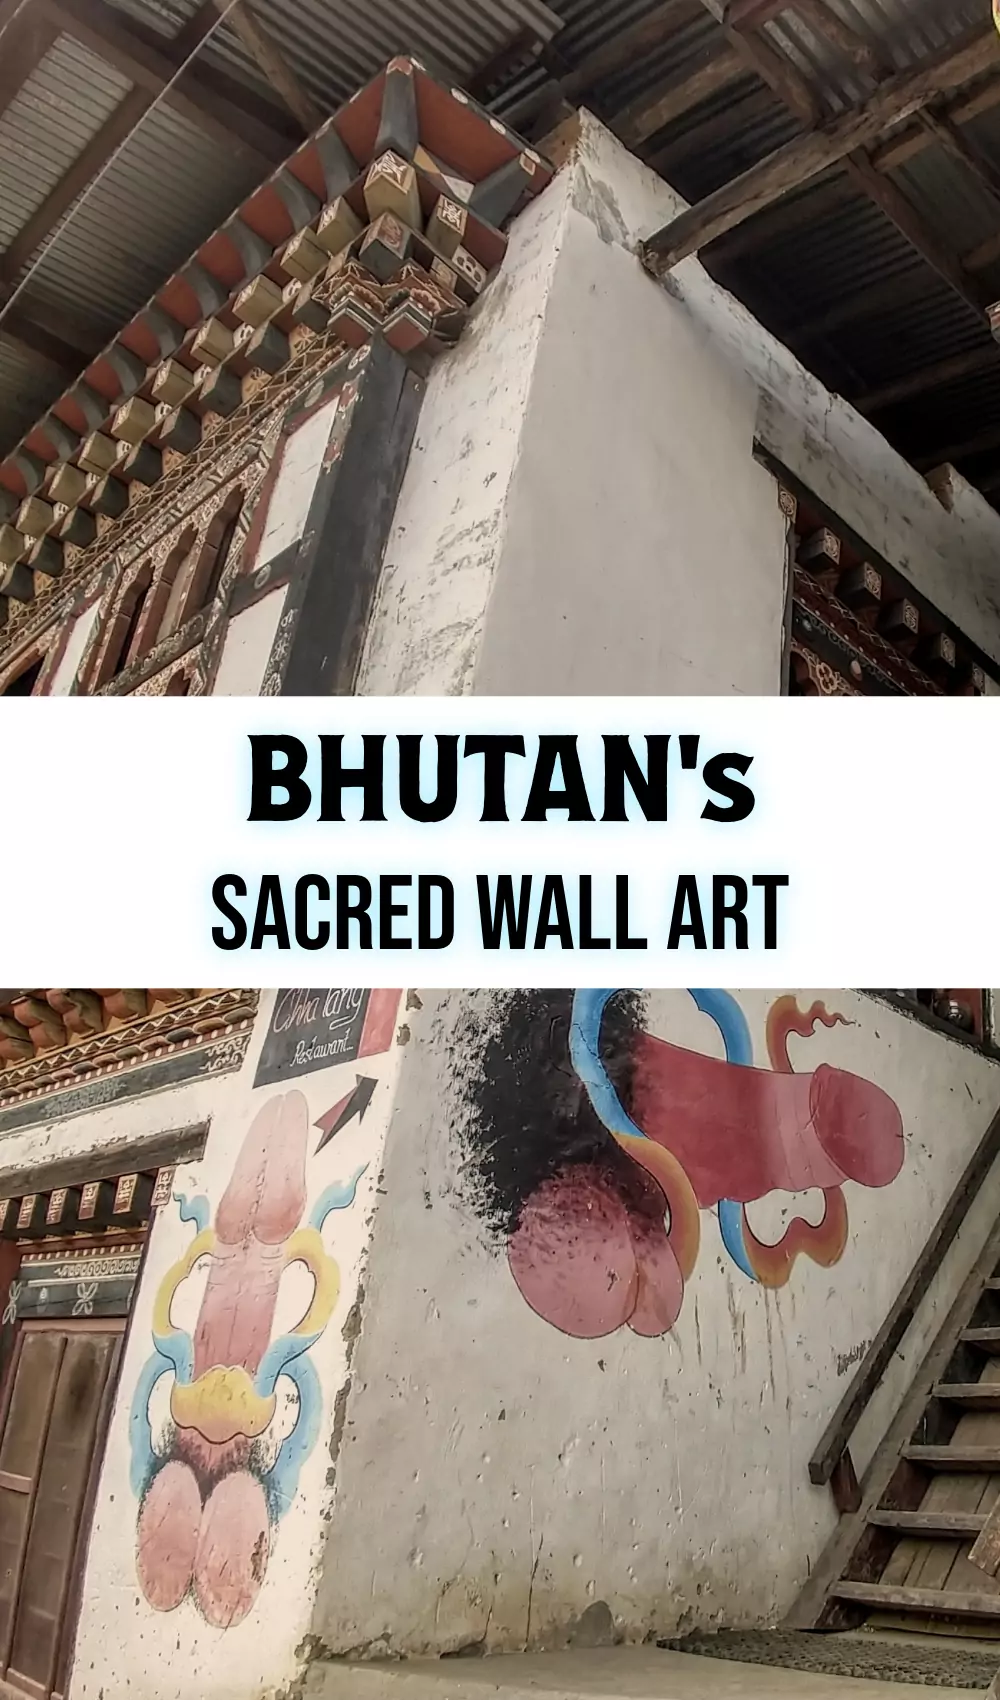 The sacred phalic wall art of Bhutan